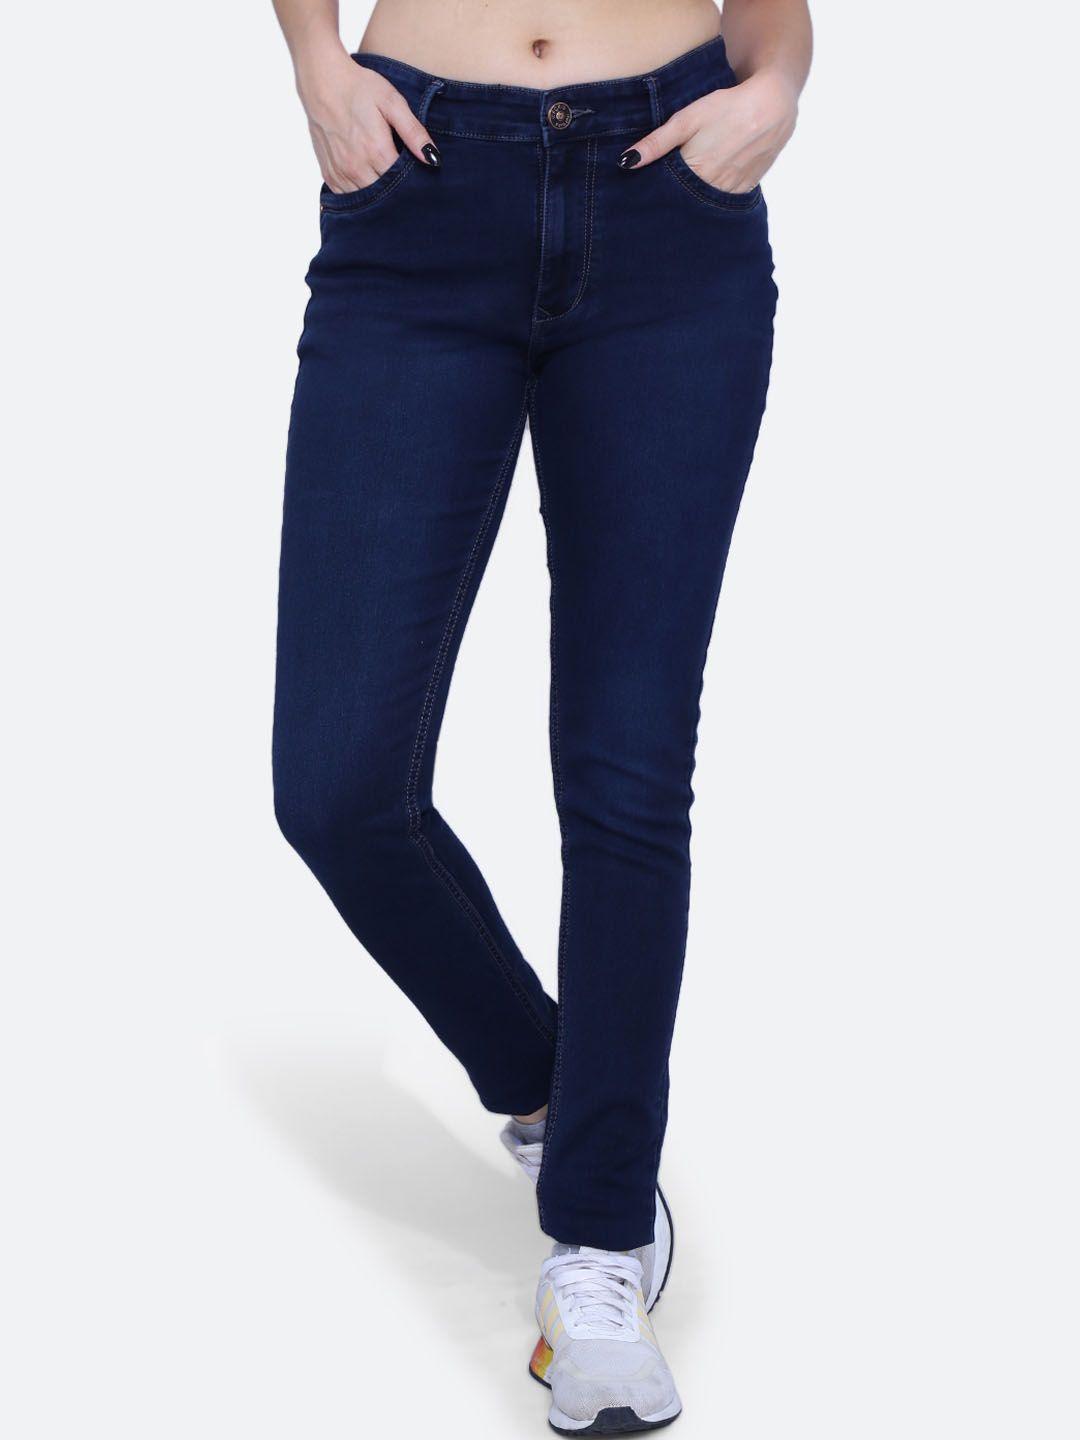 fck-3 women hottie clean look high-rise stretchable jeans